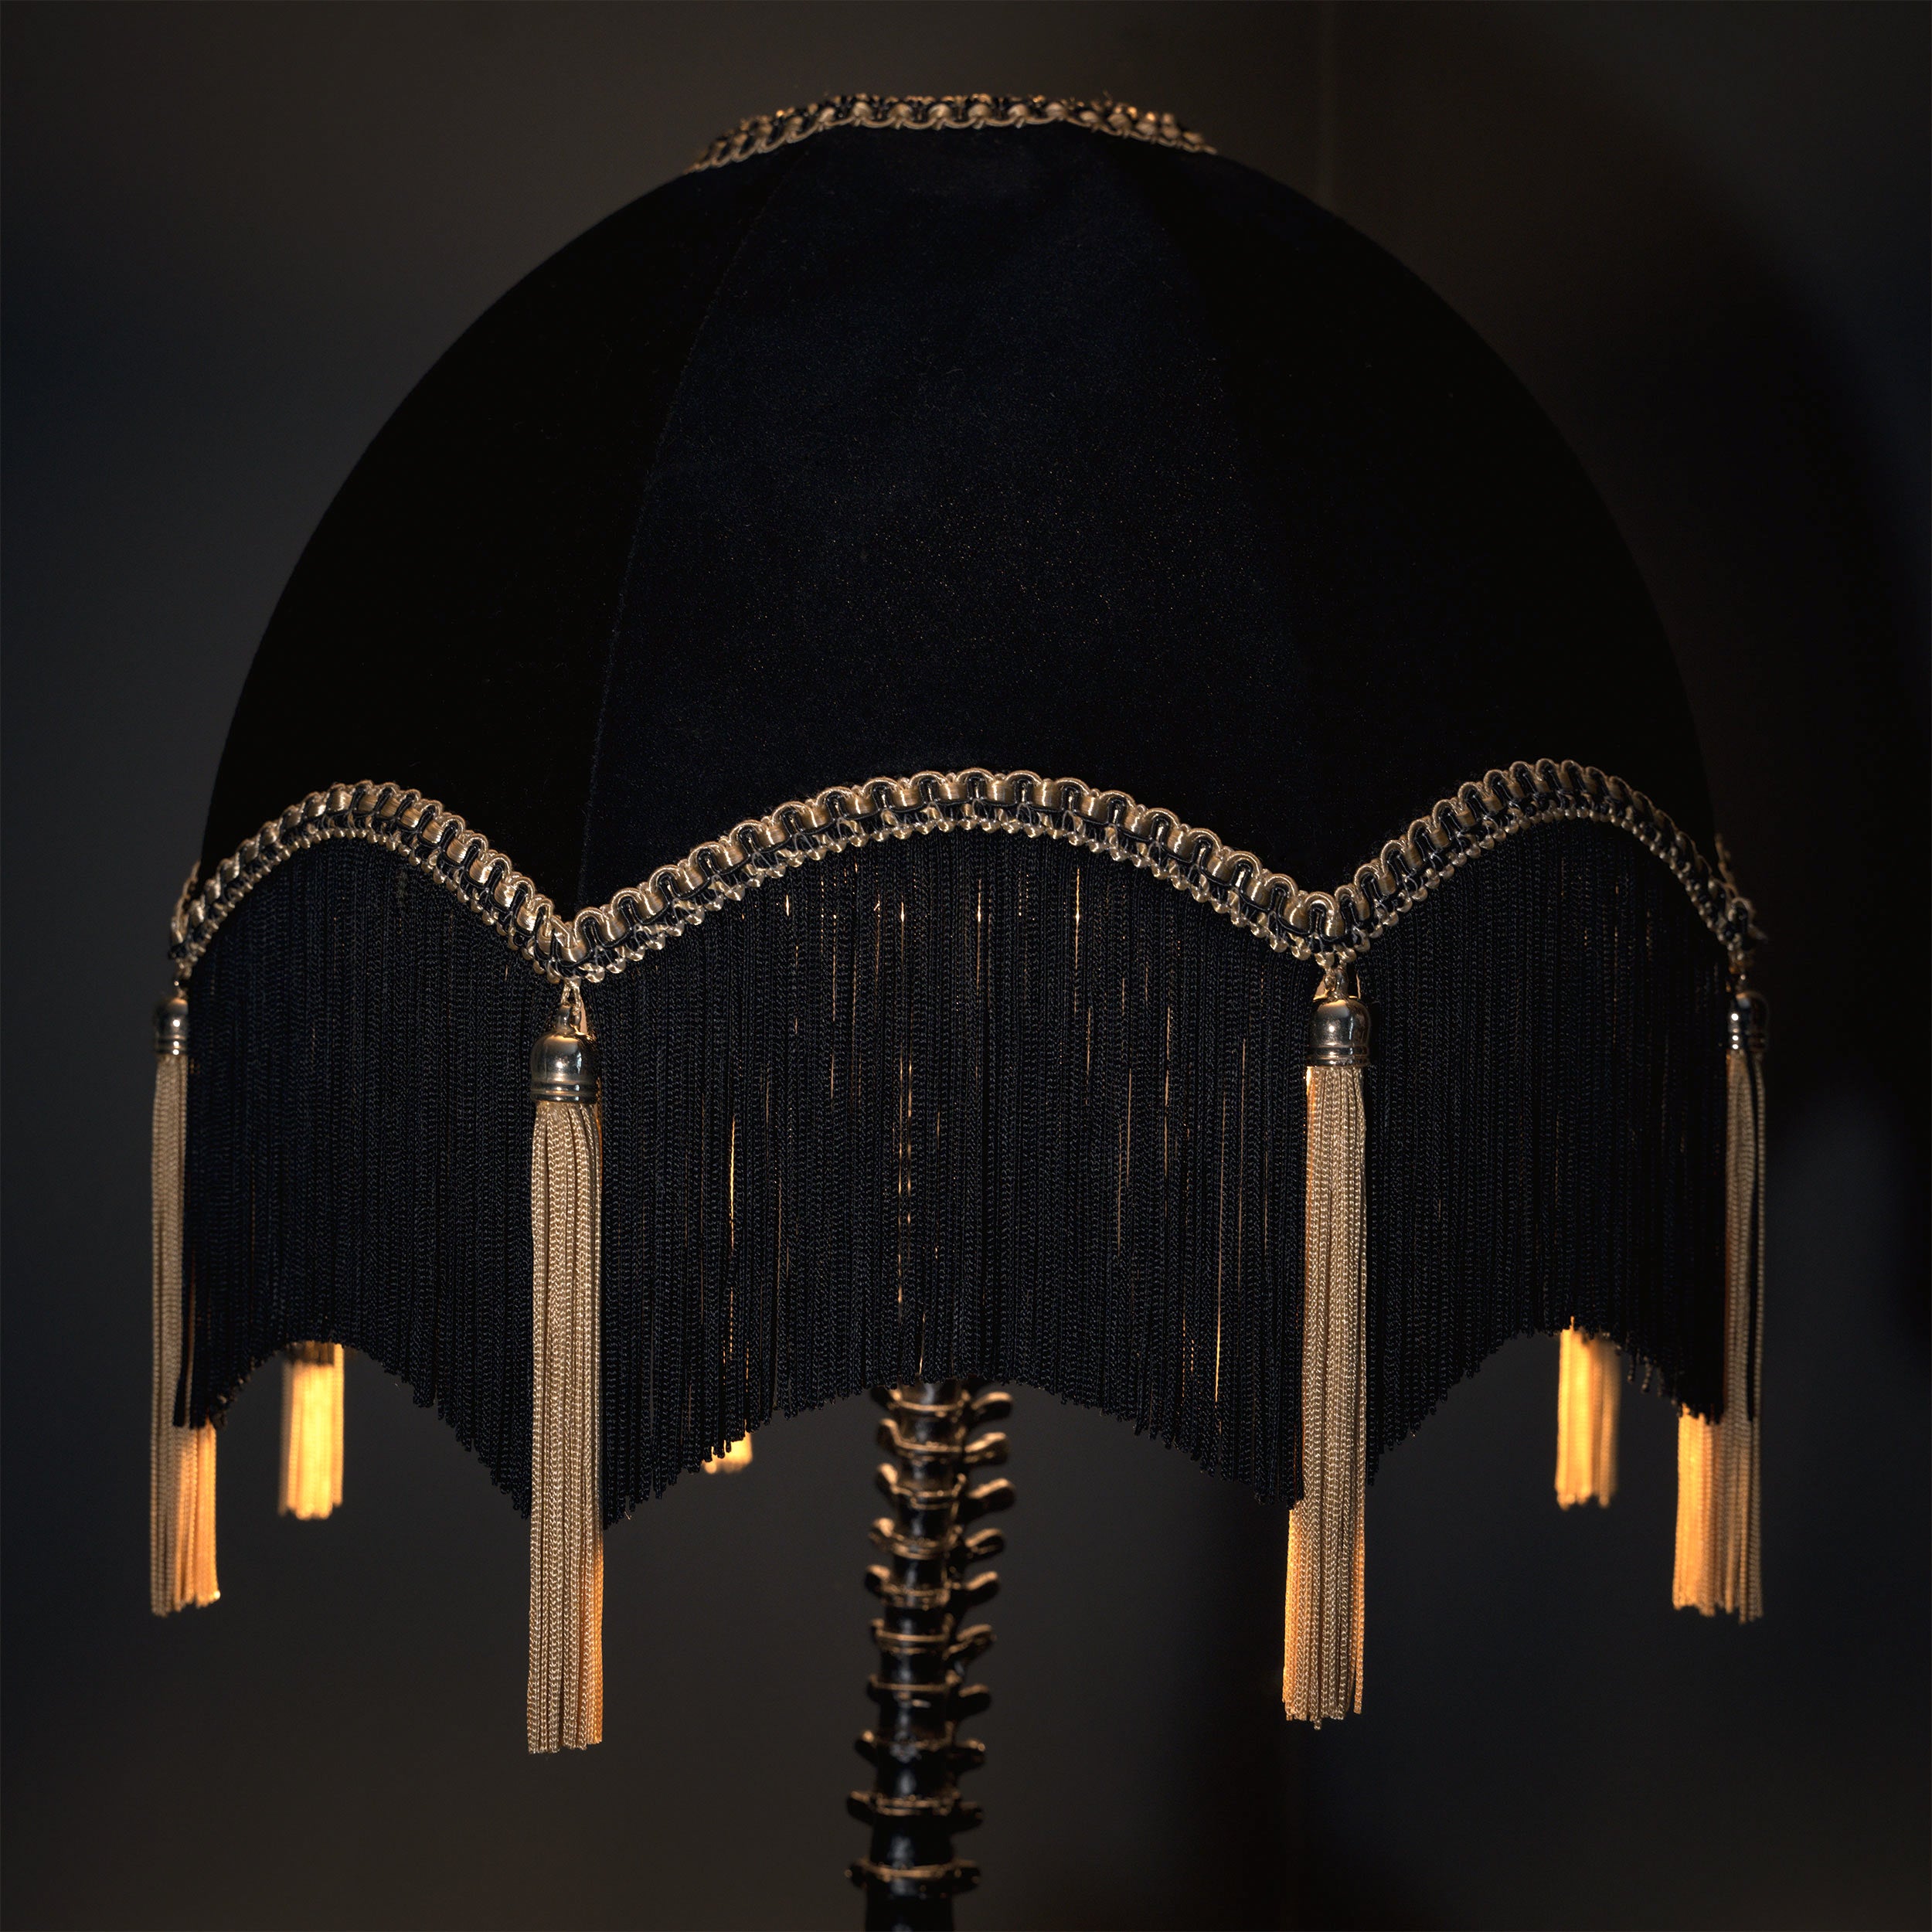 priscilla baroque lampshade - Gothic decor - The blackened teeth